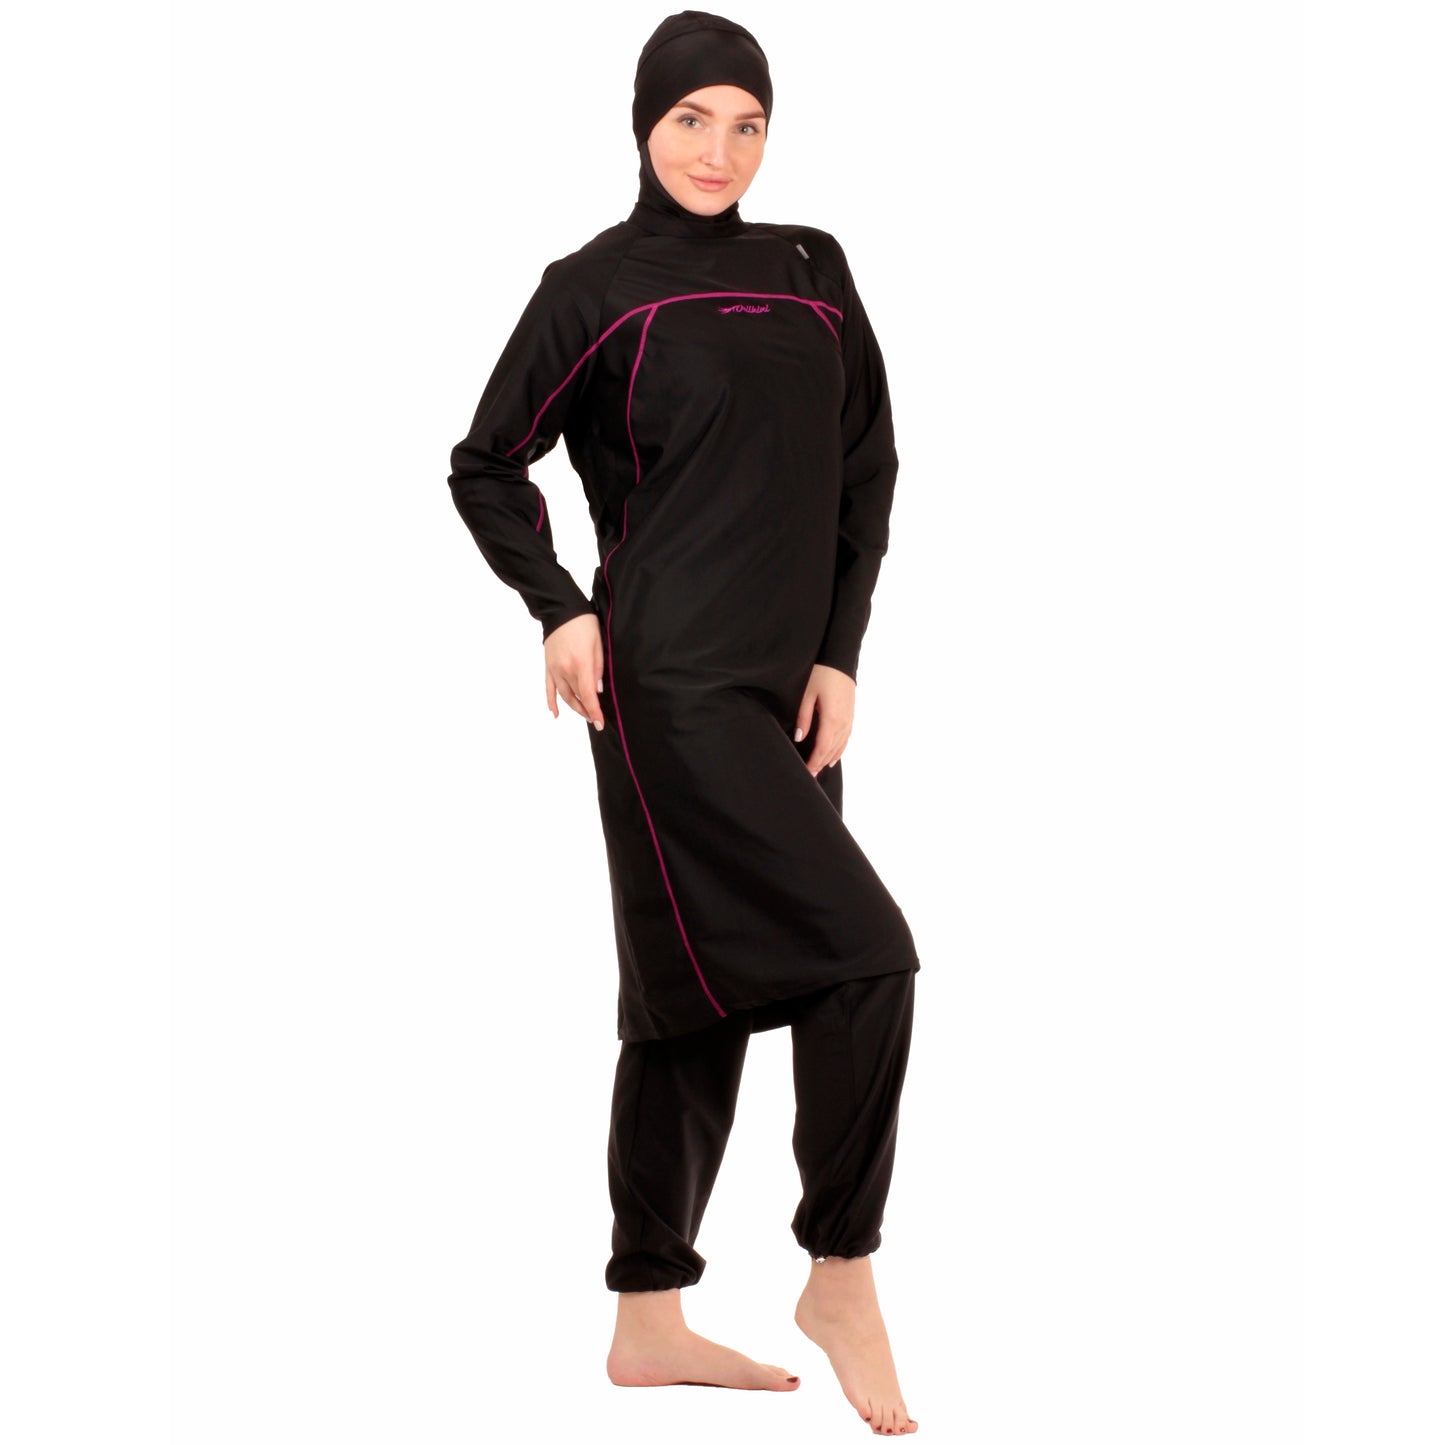 Veilkini Long Modesty Cover Swim Suit